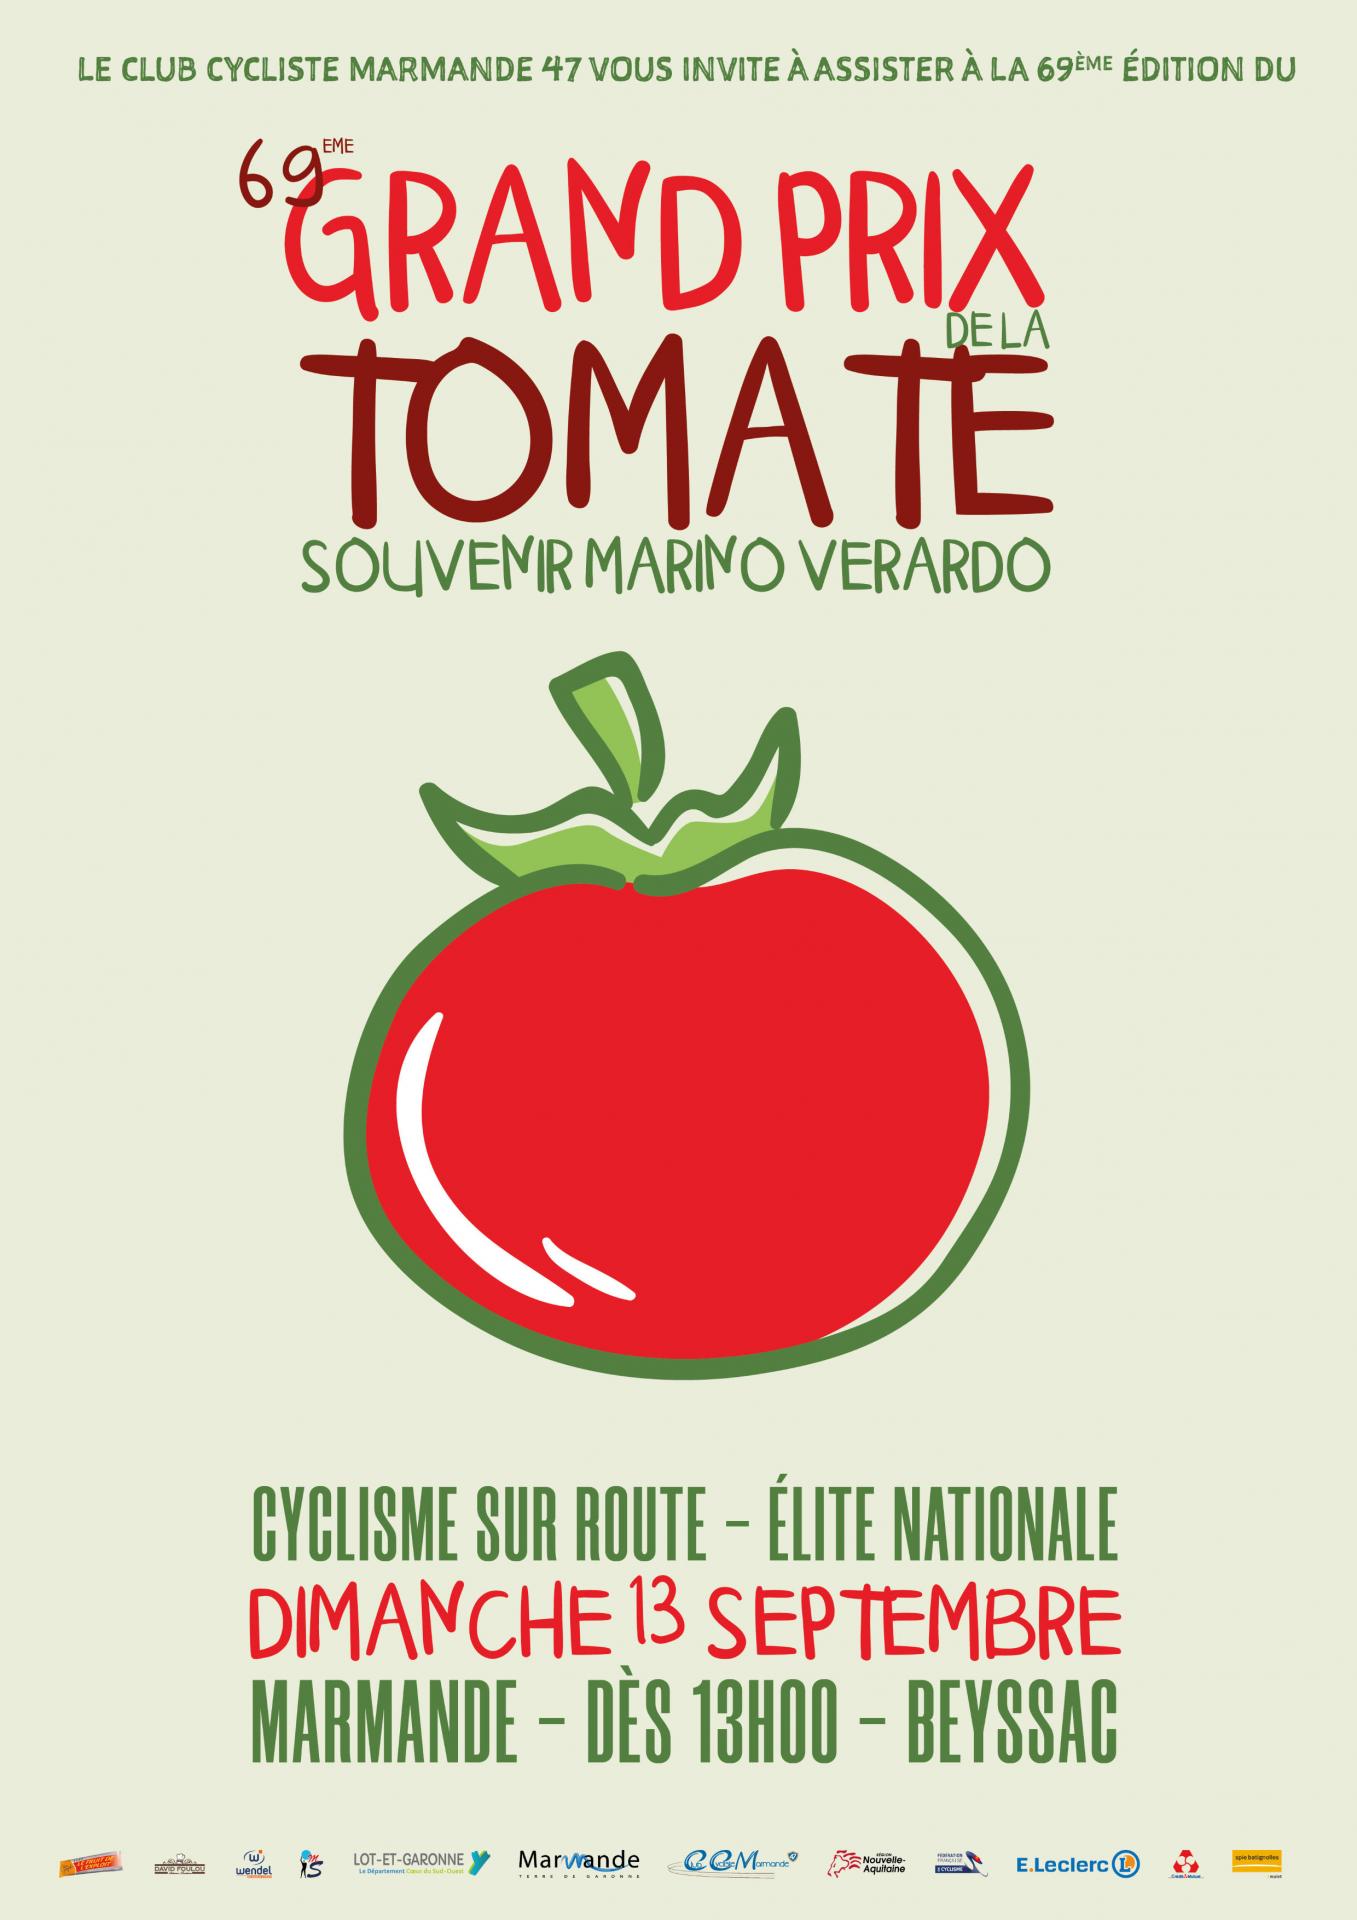 Grand prix tomate 2020